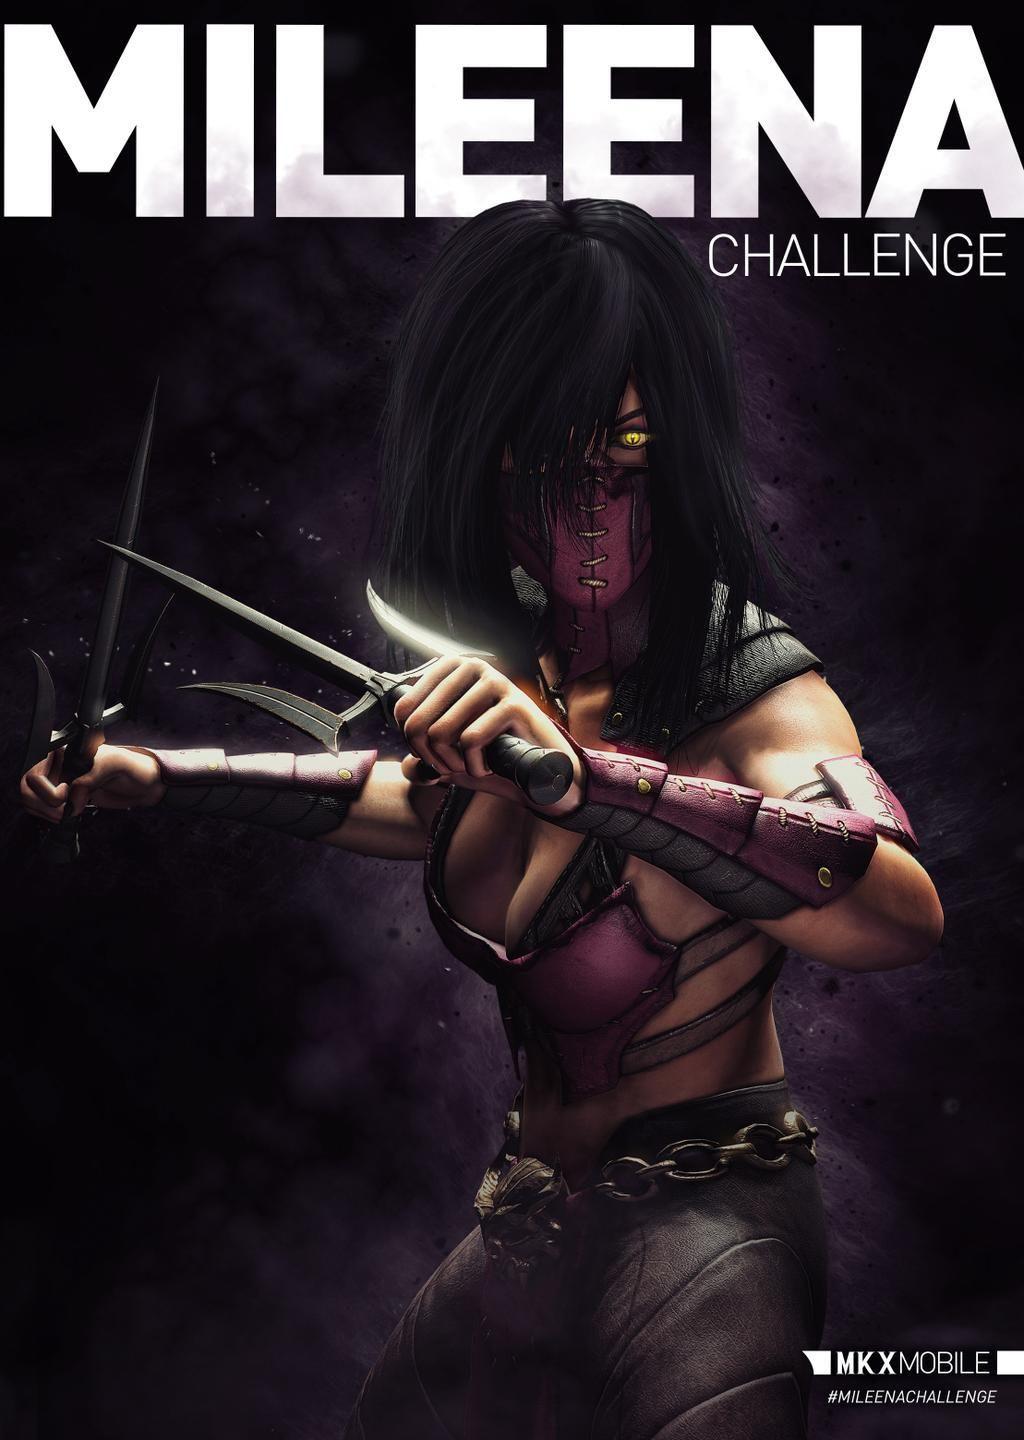 Mileena Logo - Mortal Kombat X Mobile Challenge! Kombat Online